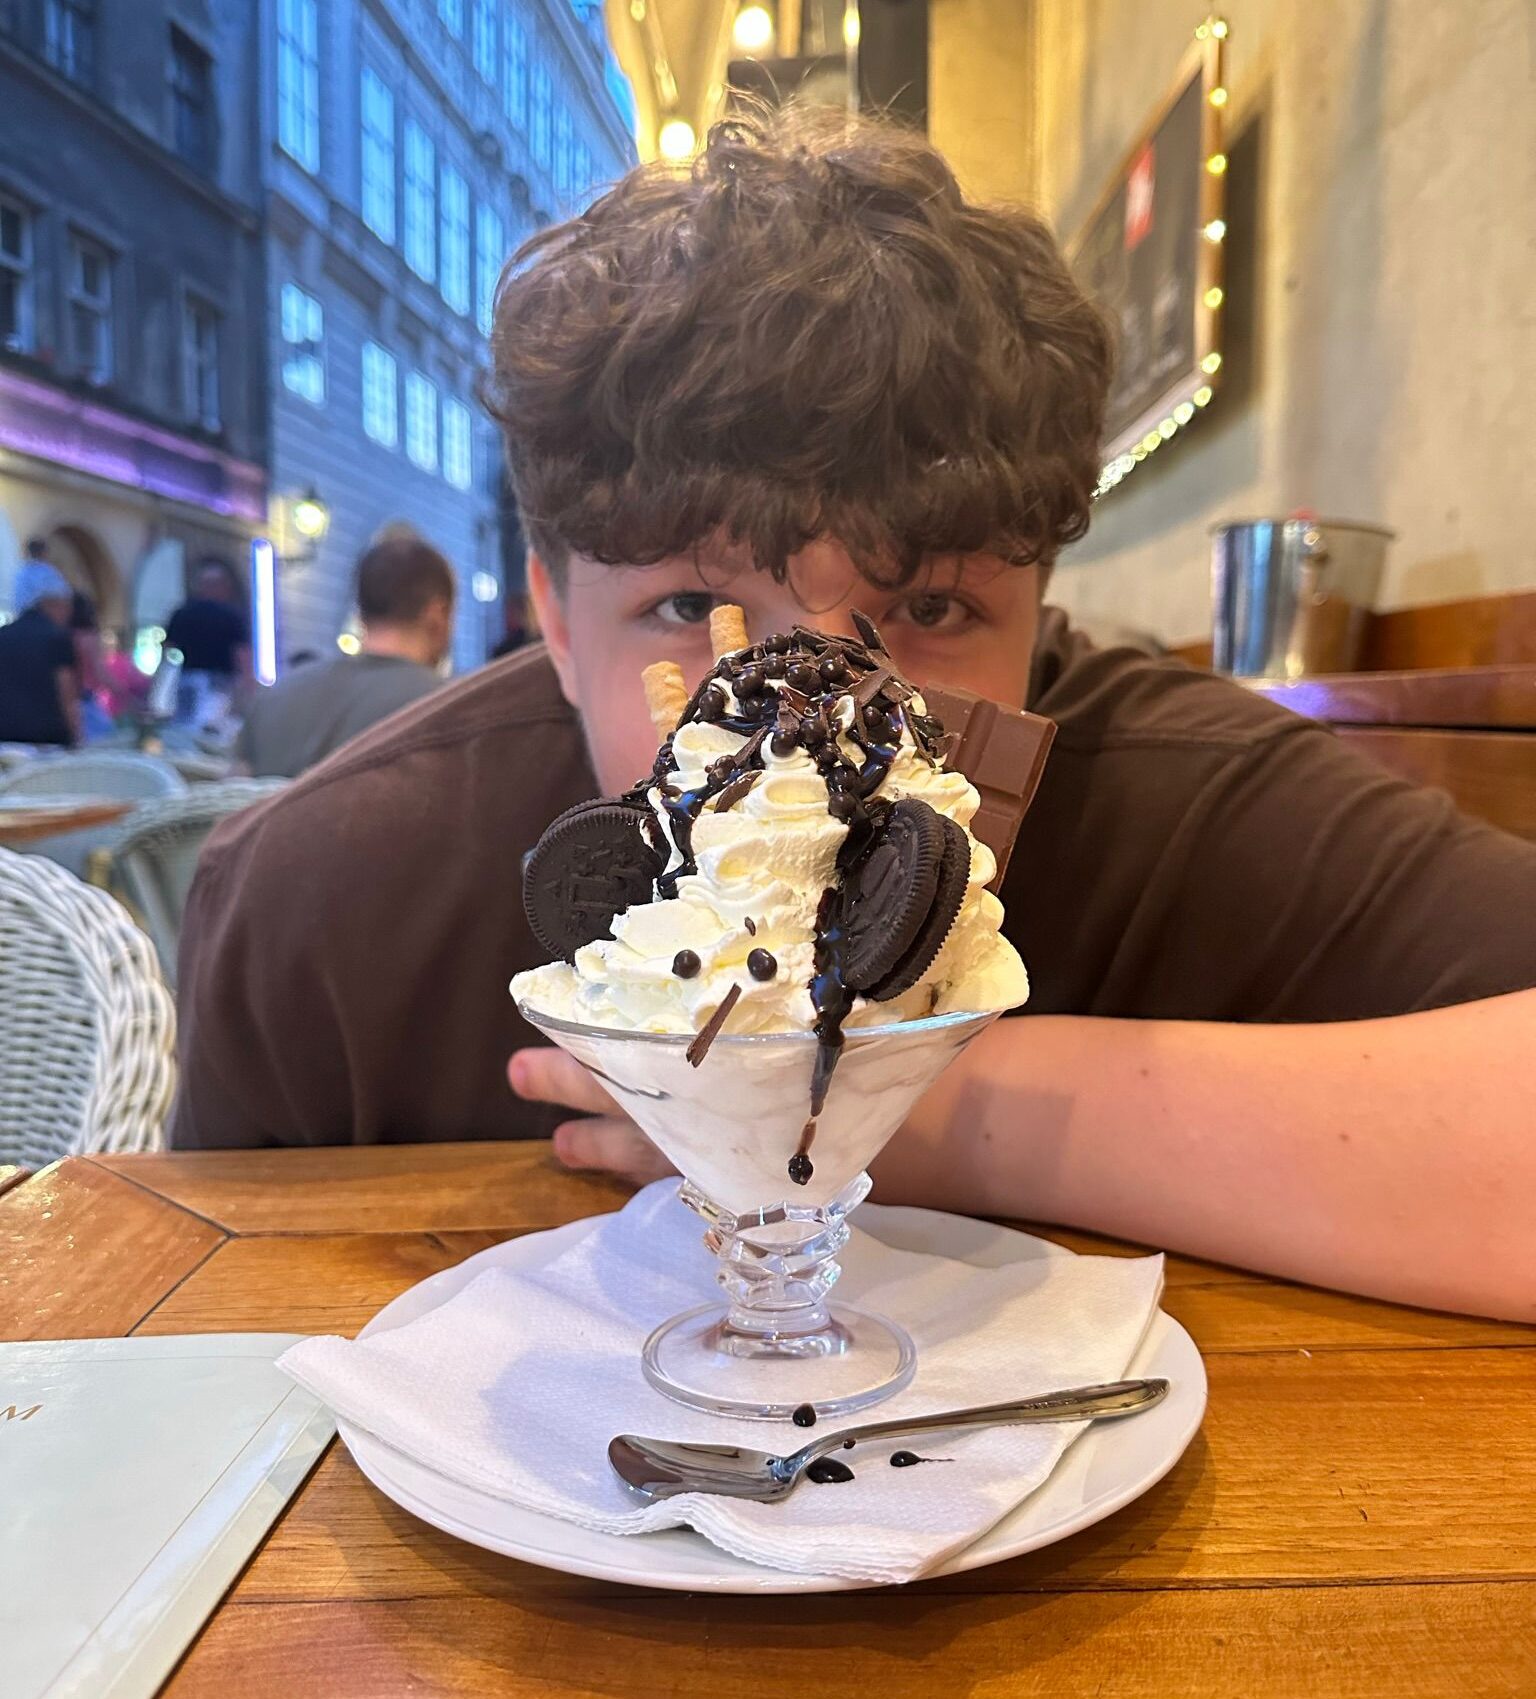 A teenager hiding behind a large icecream dessert on a European street